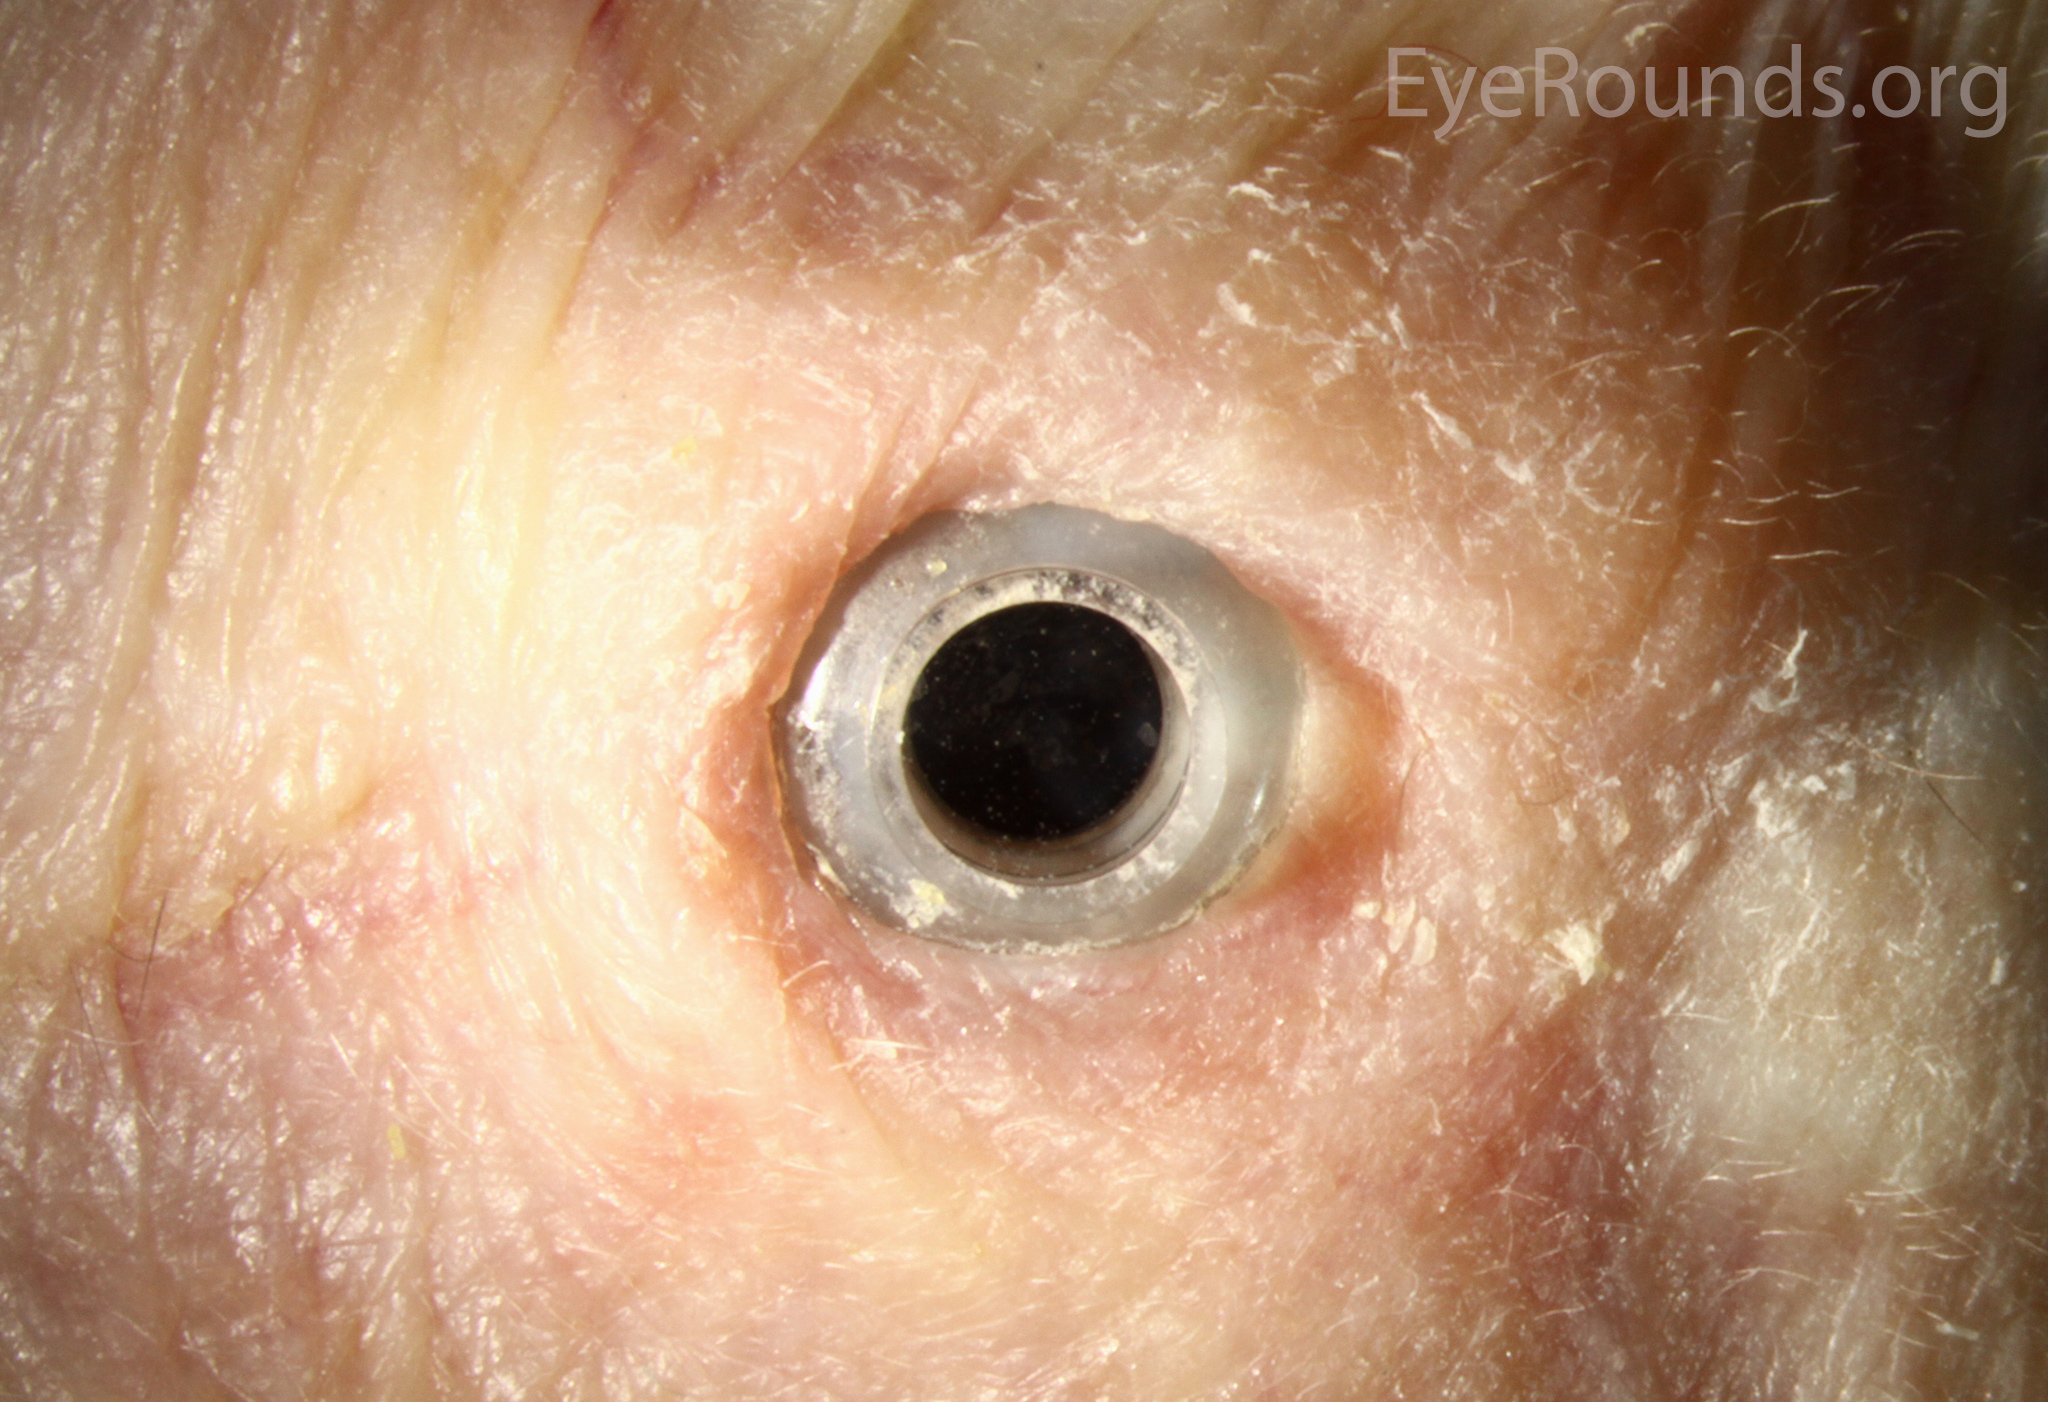 Boston Type II KPro for severe ocular cicatricial pemphigoid